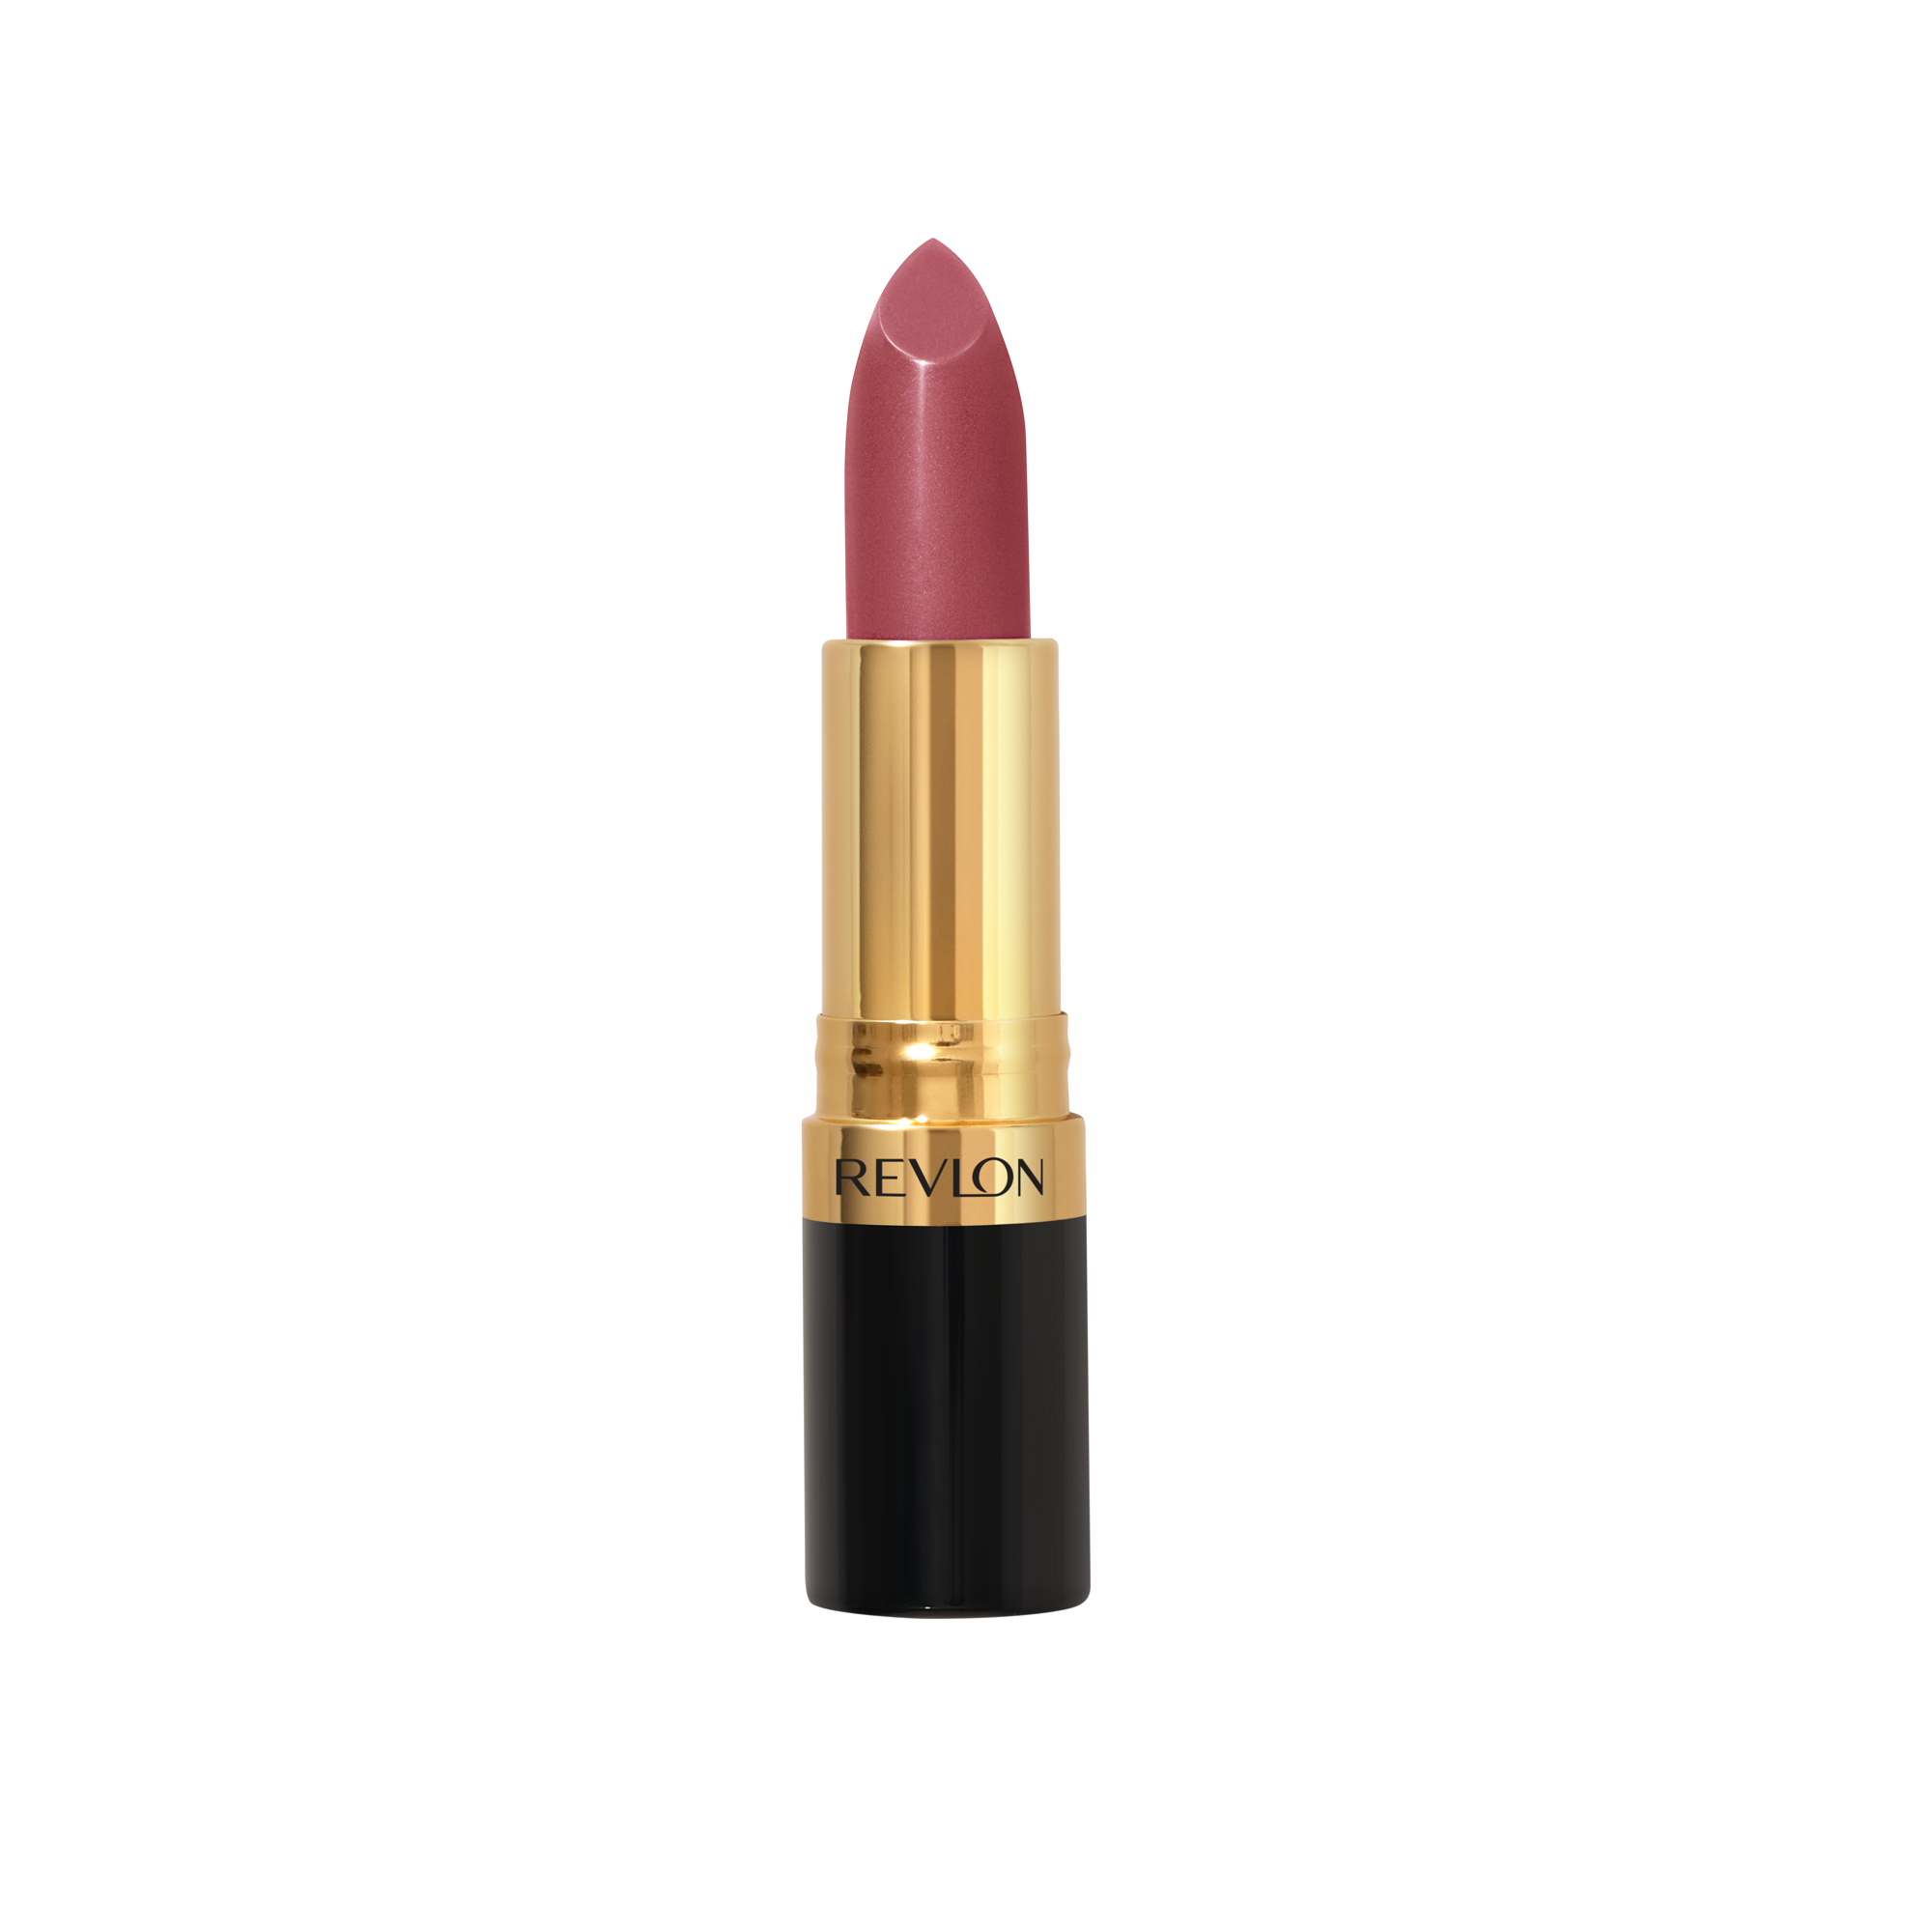 Revlon Super Lustrous Lipstick, Berry Smoothie - image 1 of 7